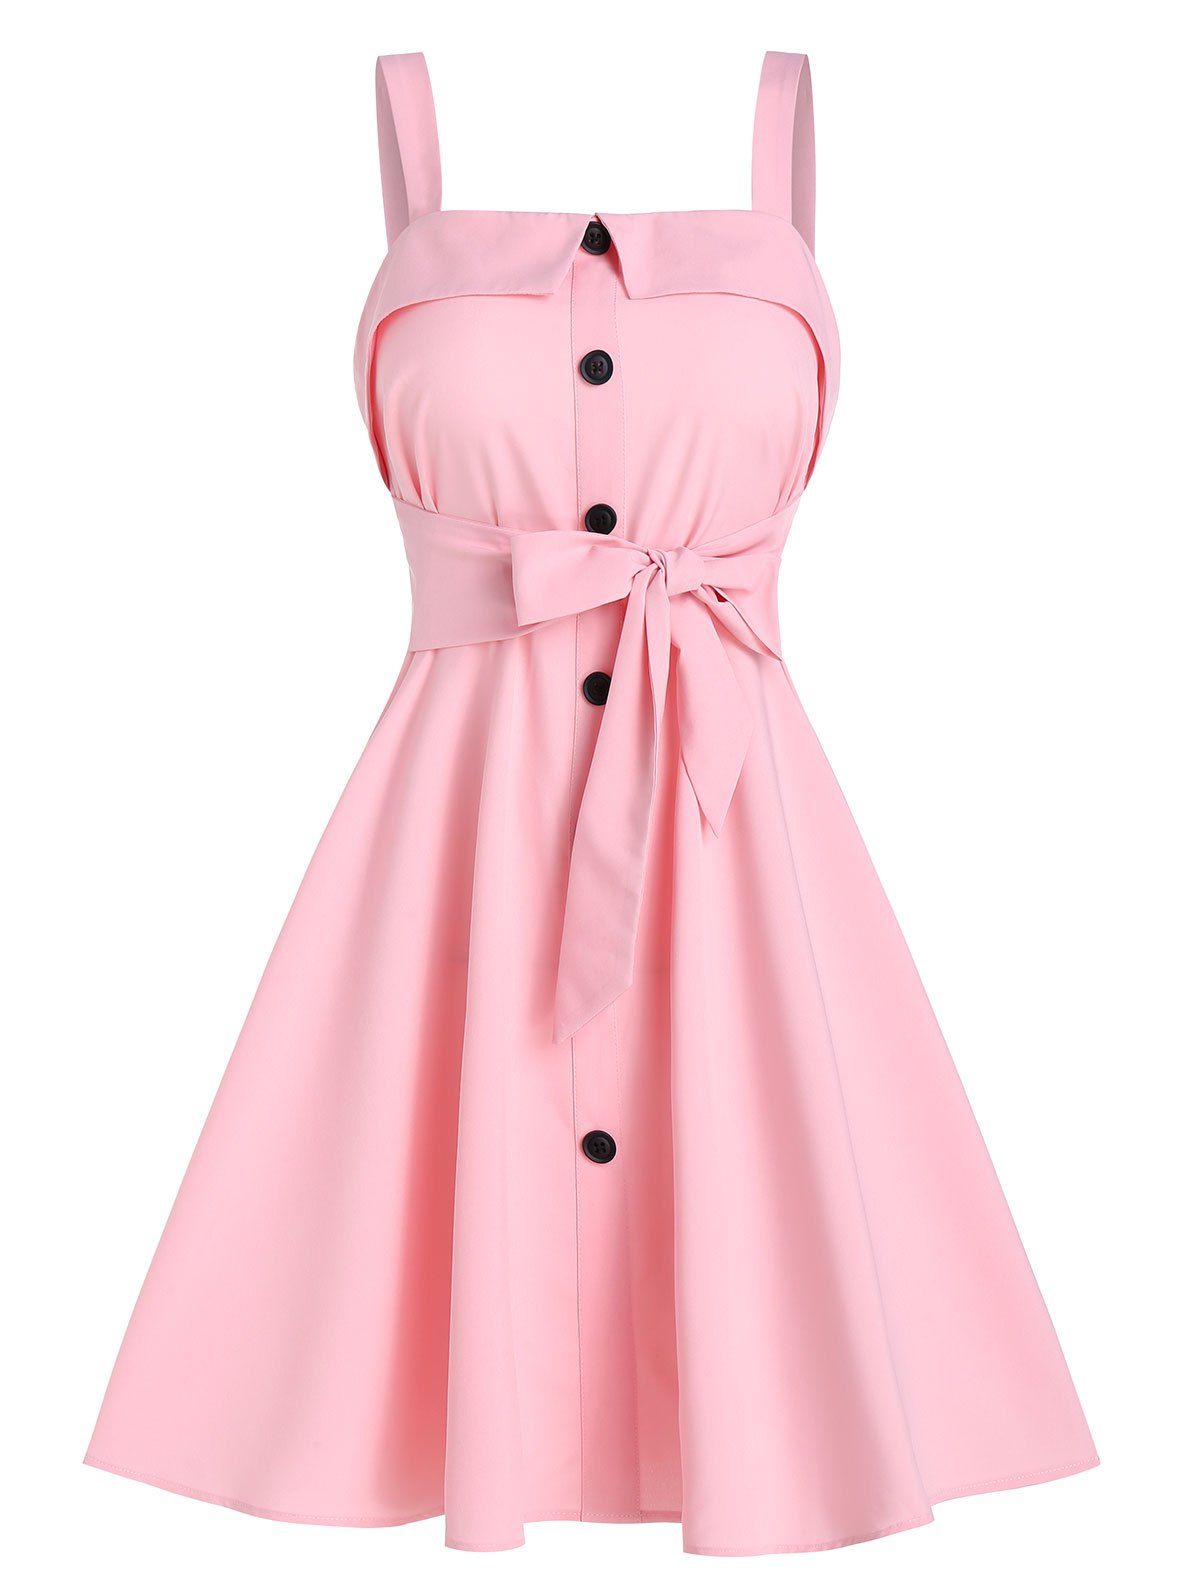 Mock Button Bow Tie Mini Cami Dress - PINK 3XL